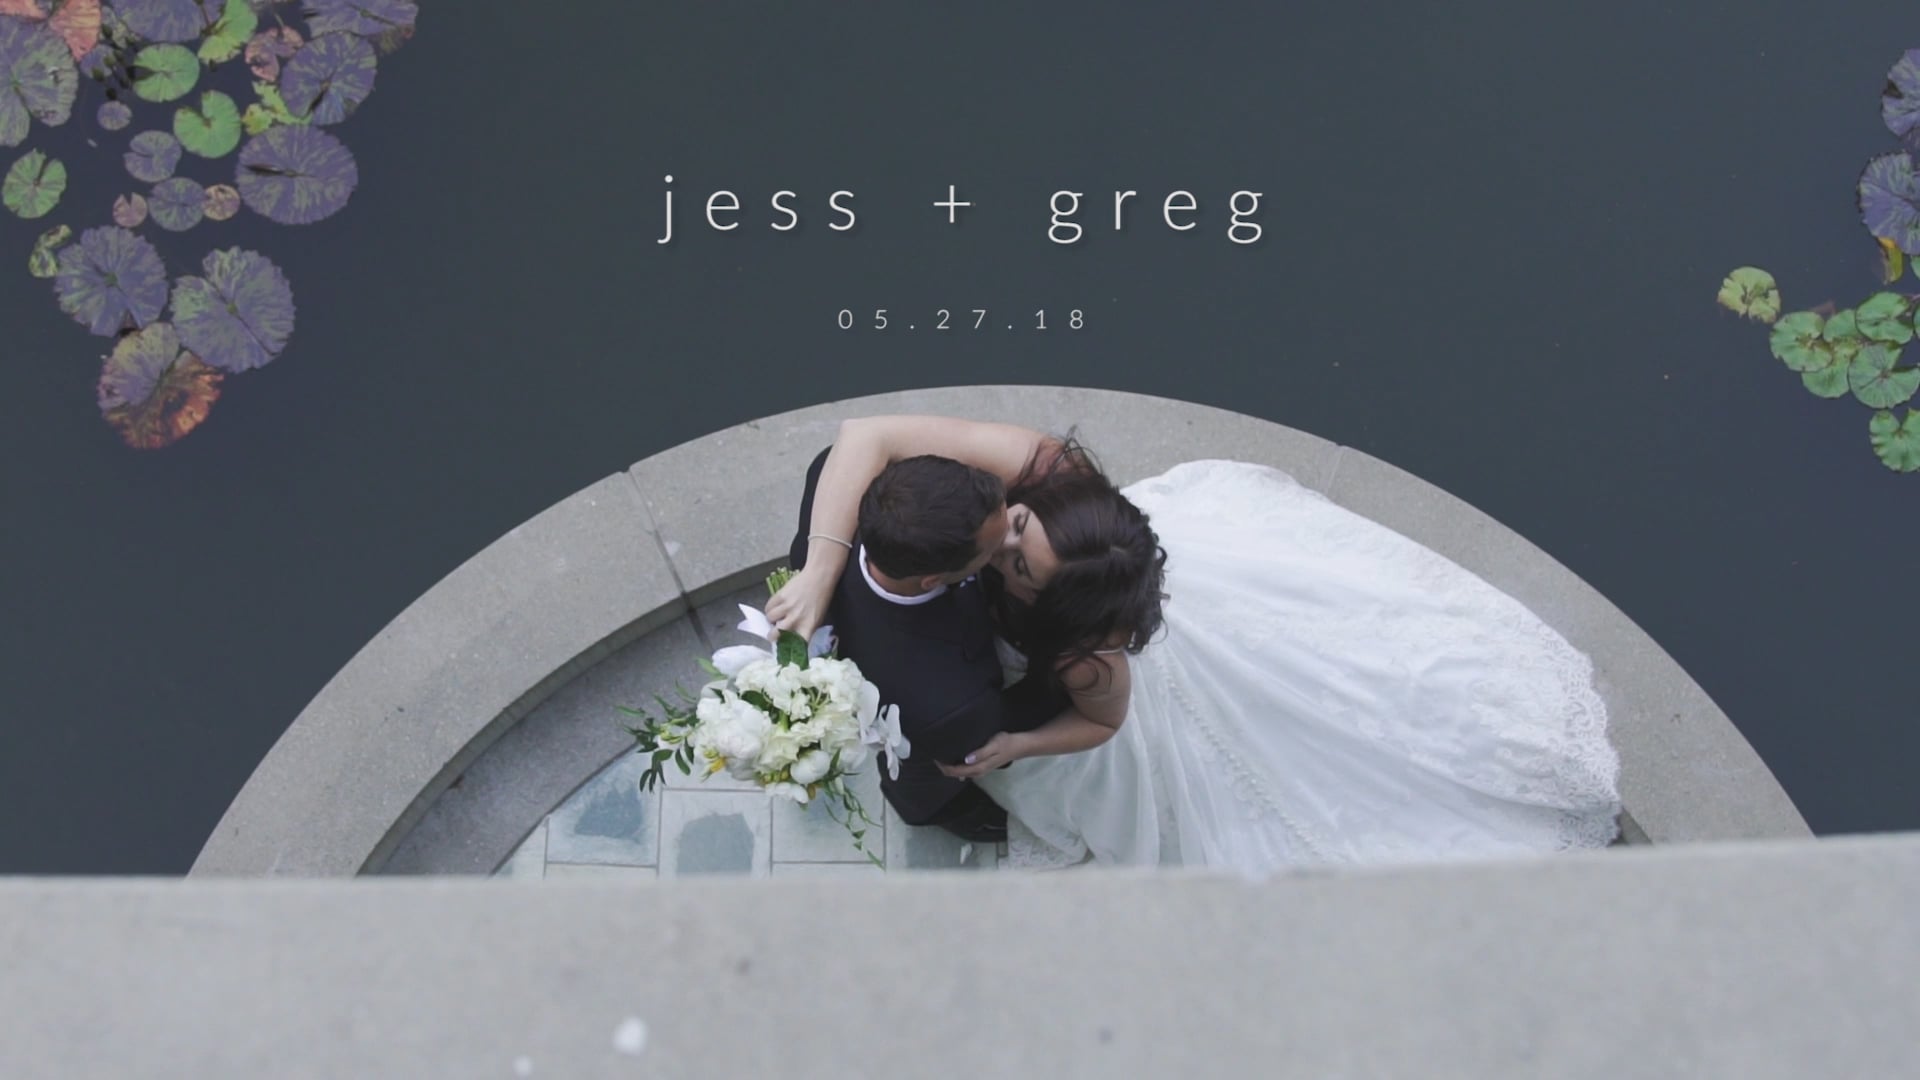 Jess + Greg | Highlight with Audio